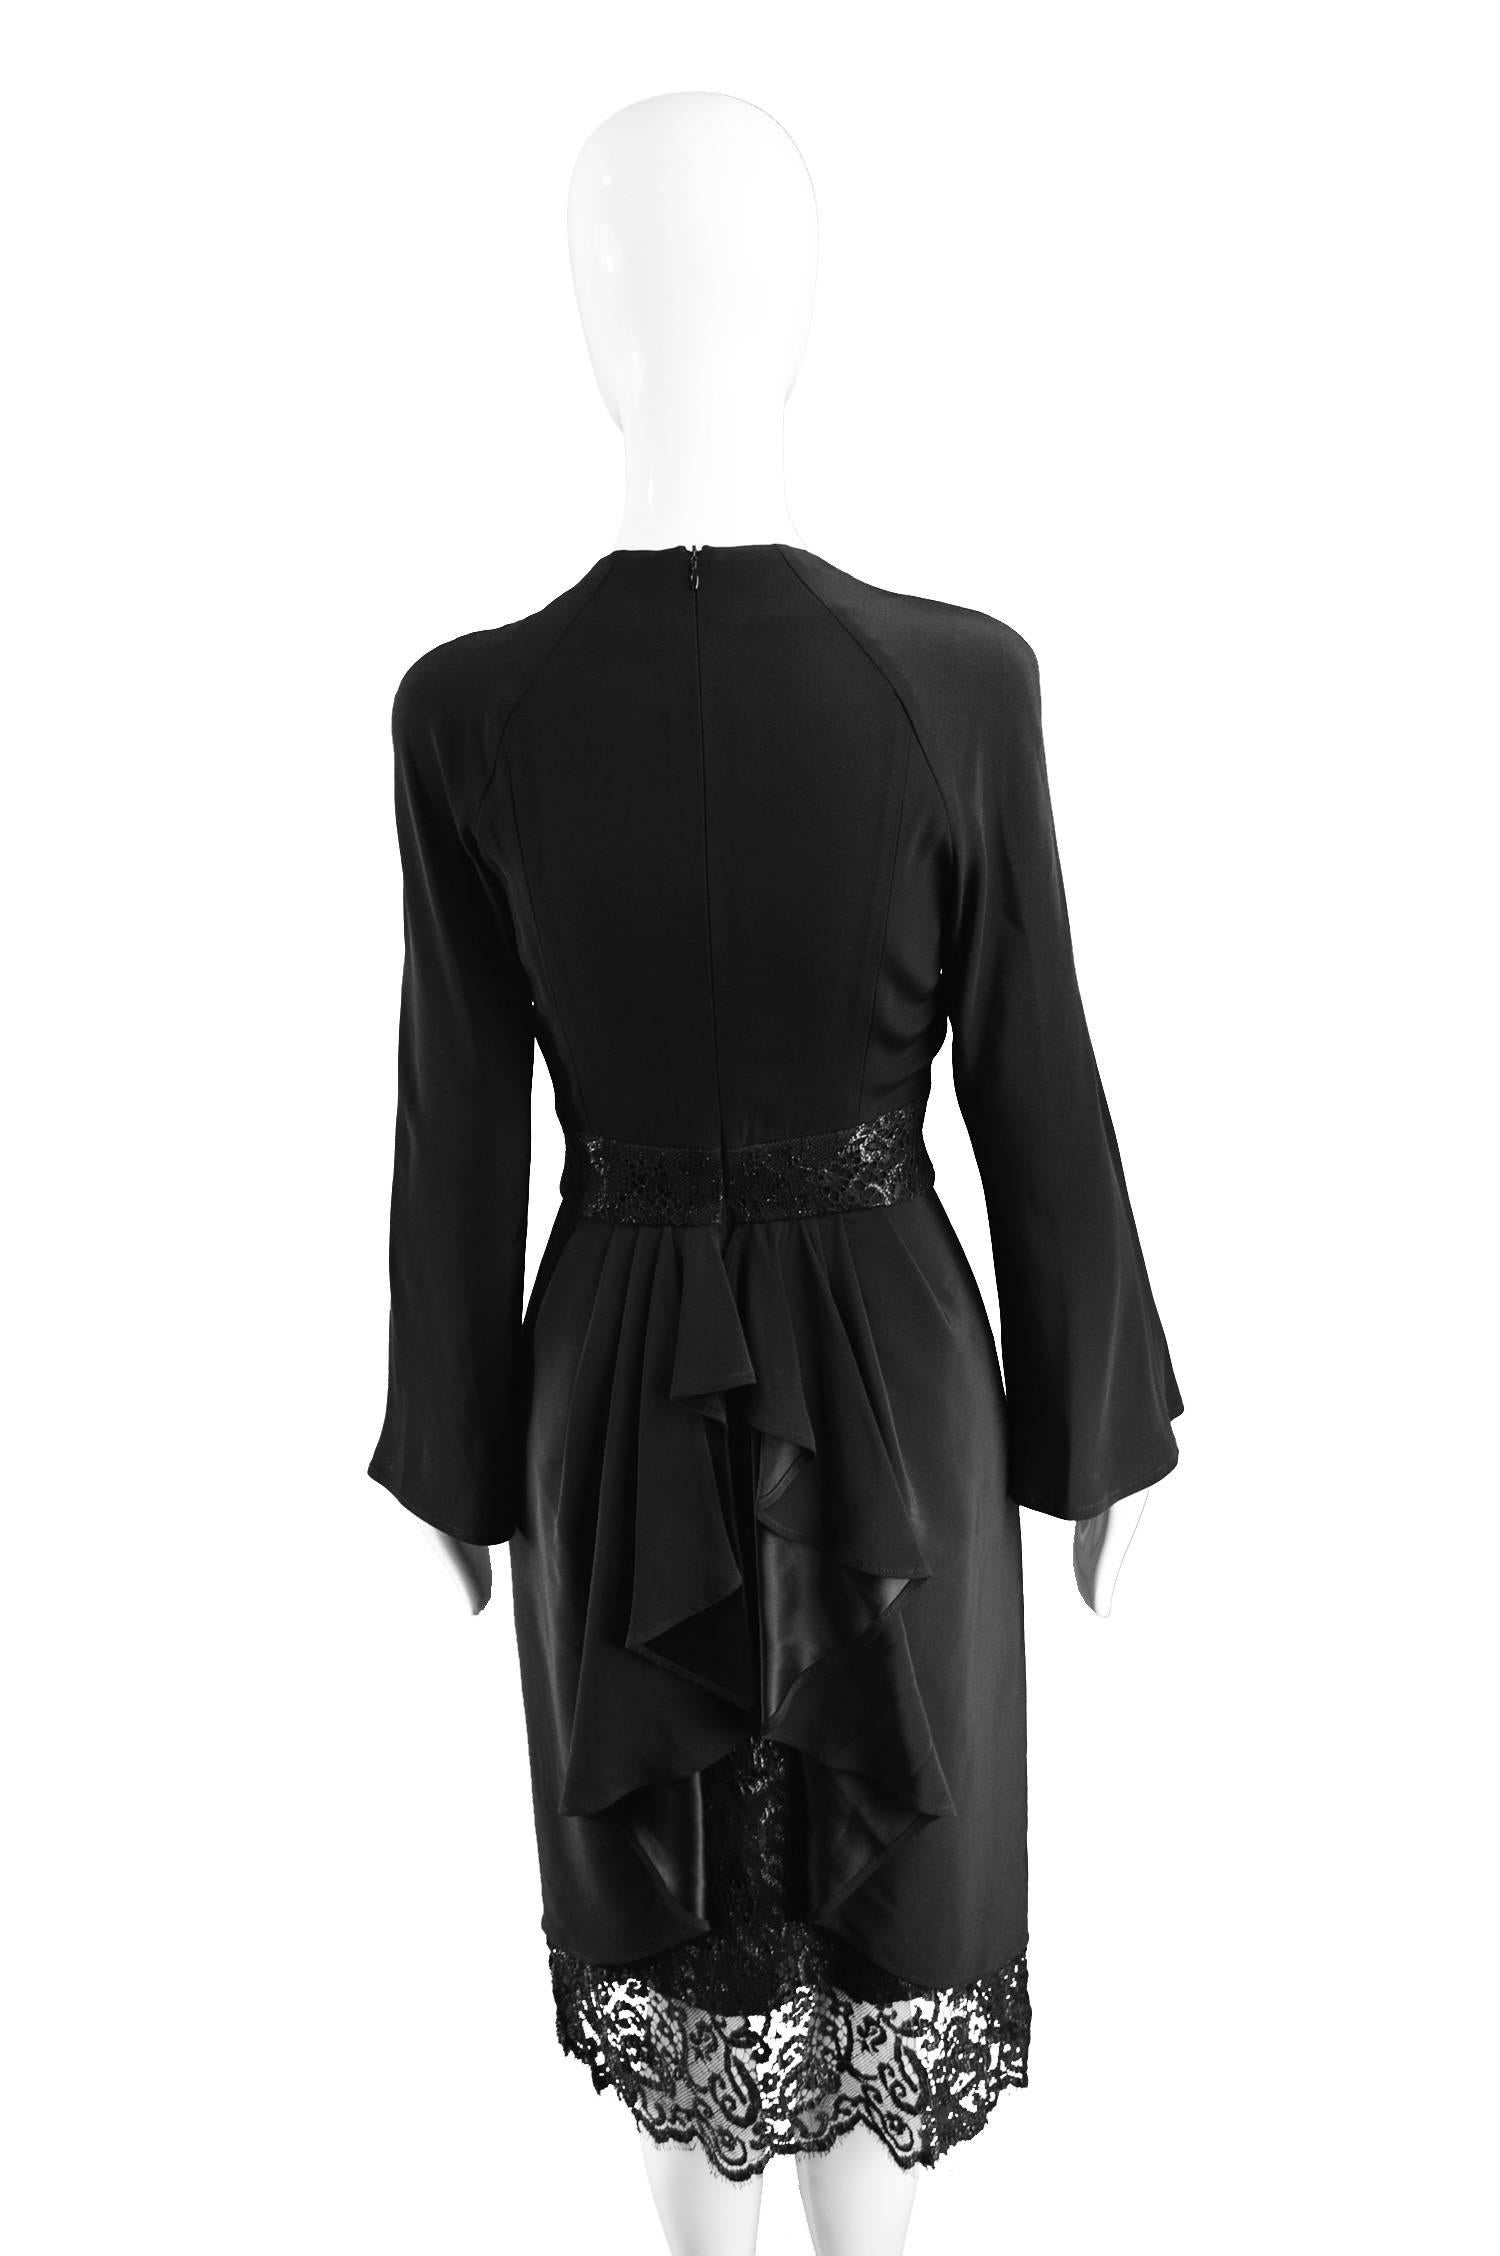 Christian Lacroix Vintage Black Lace and Satin Back Crepe Dress, 1990s For Sale 3